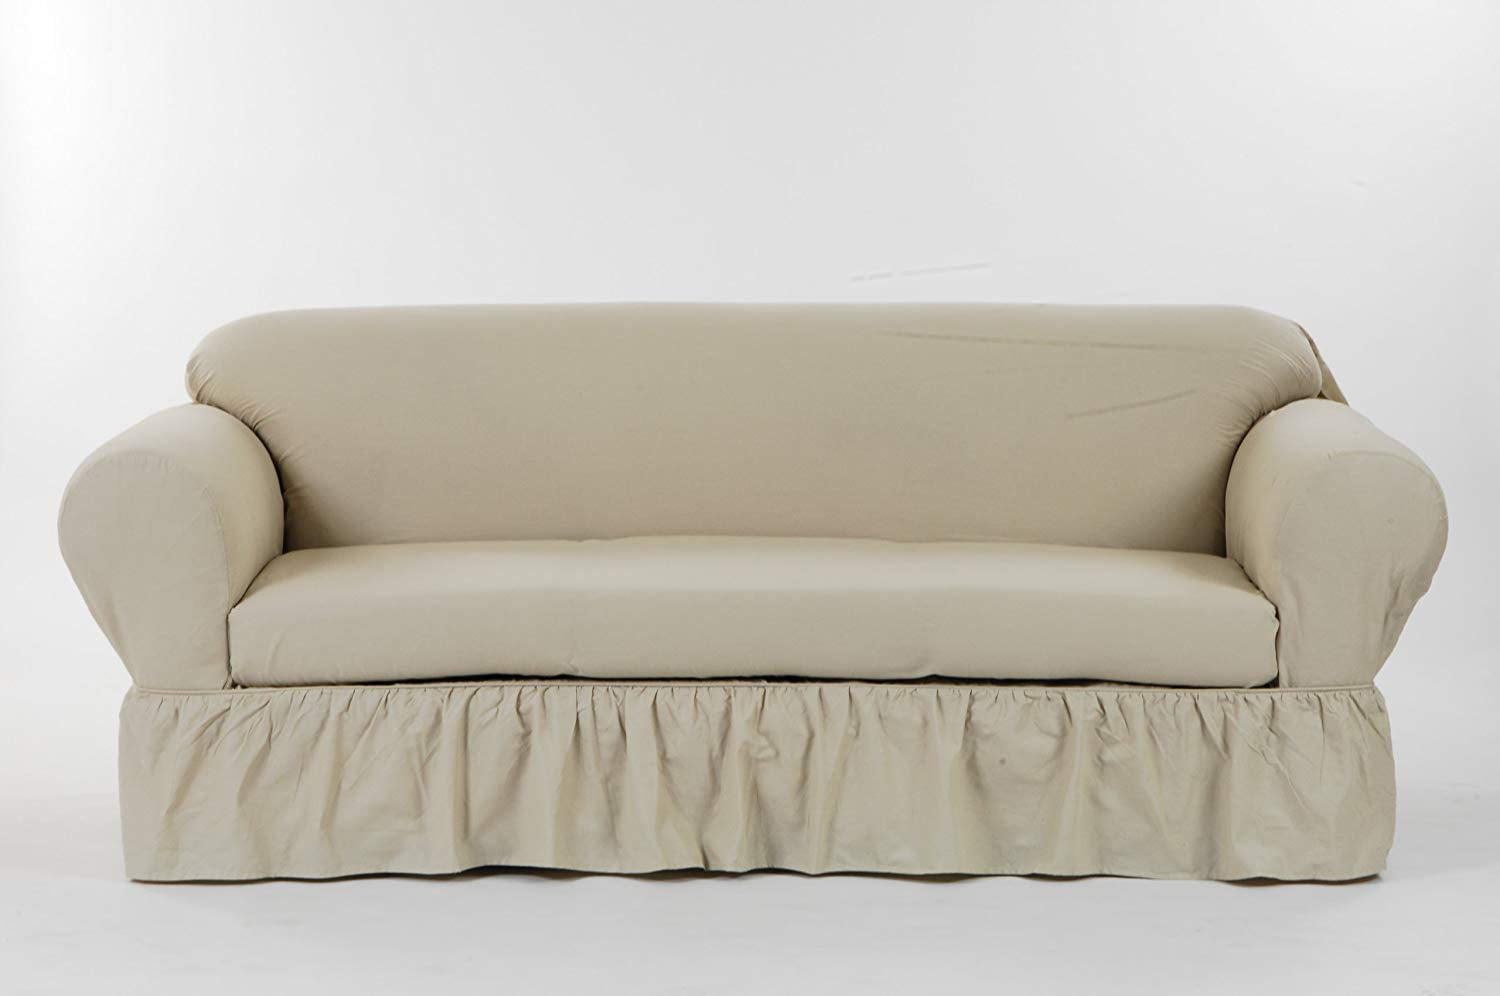 Classic Slipcover cotton 2 piece ruffled sofa slipcover